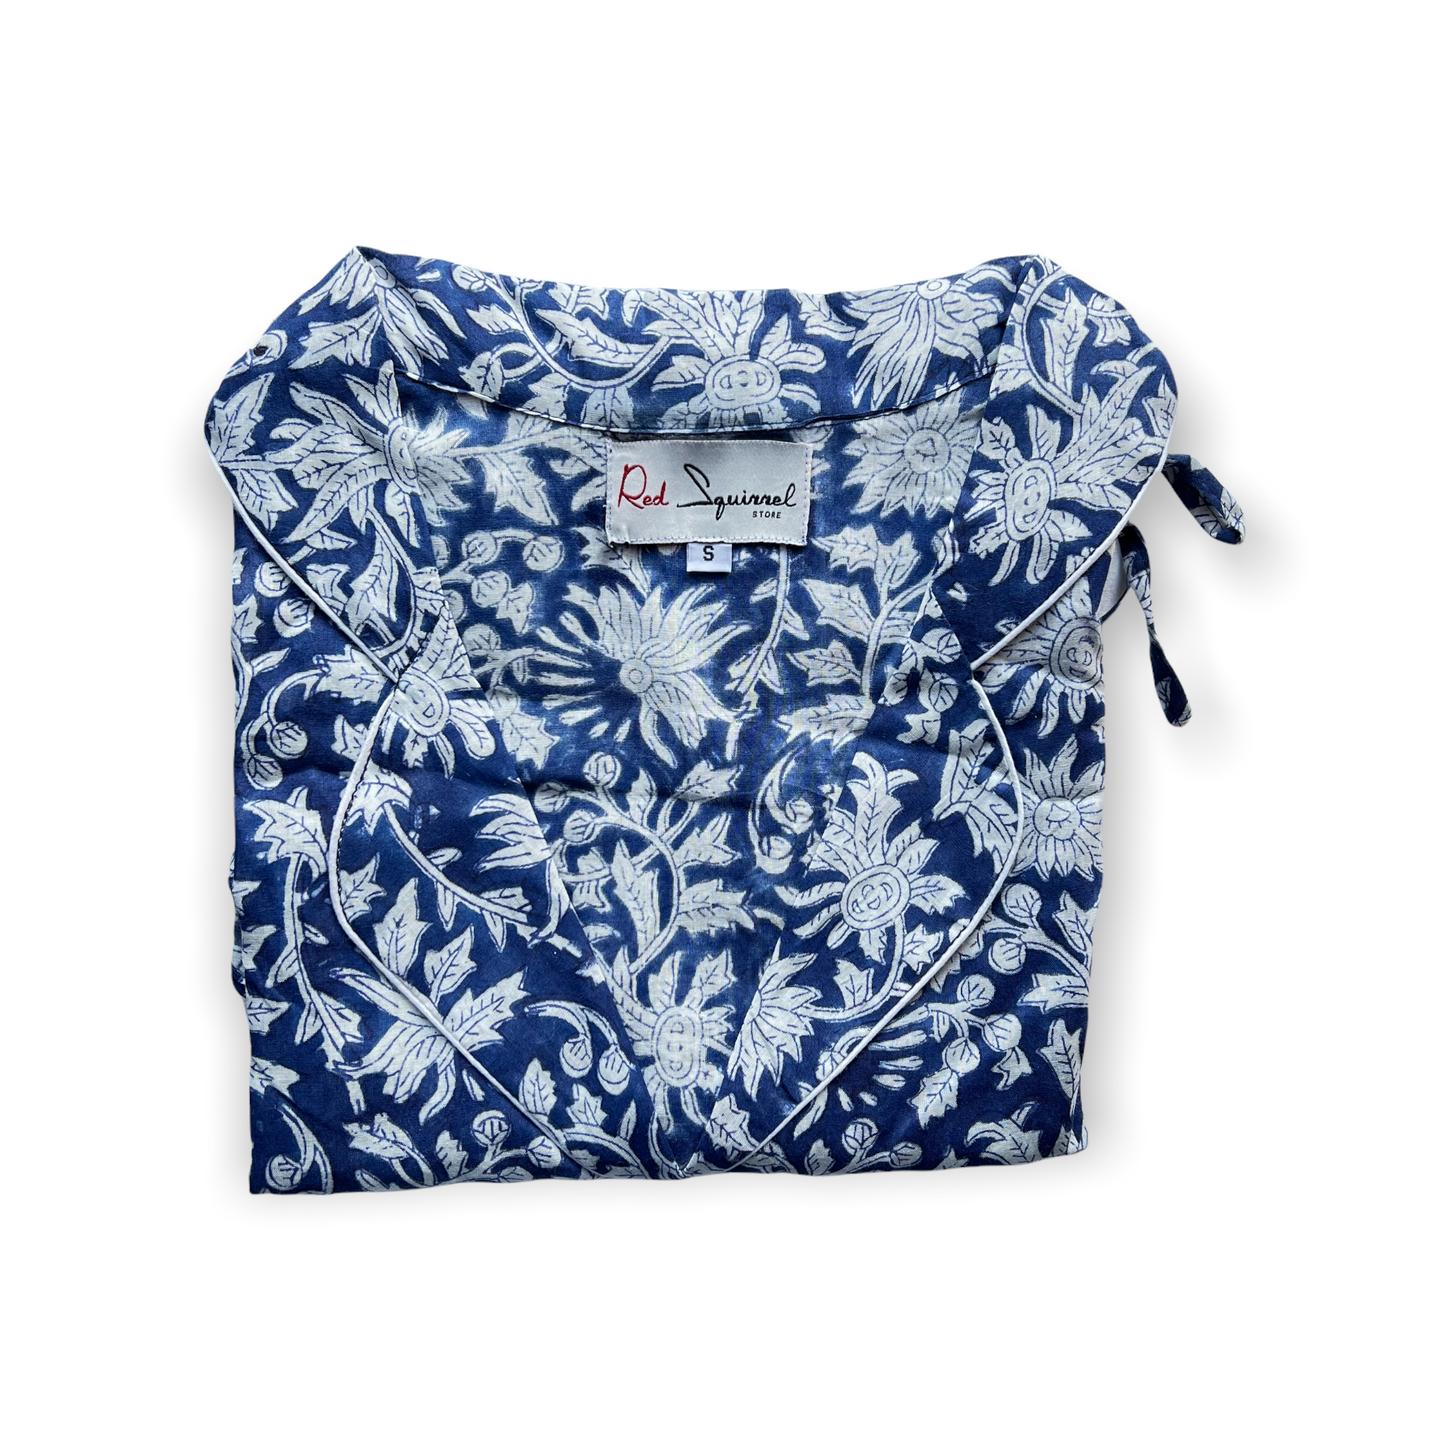 Block Print Pyjamas - Flowers and Leaves Deep Blue White